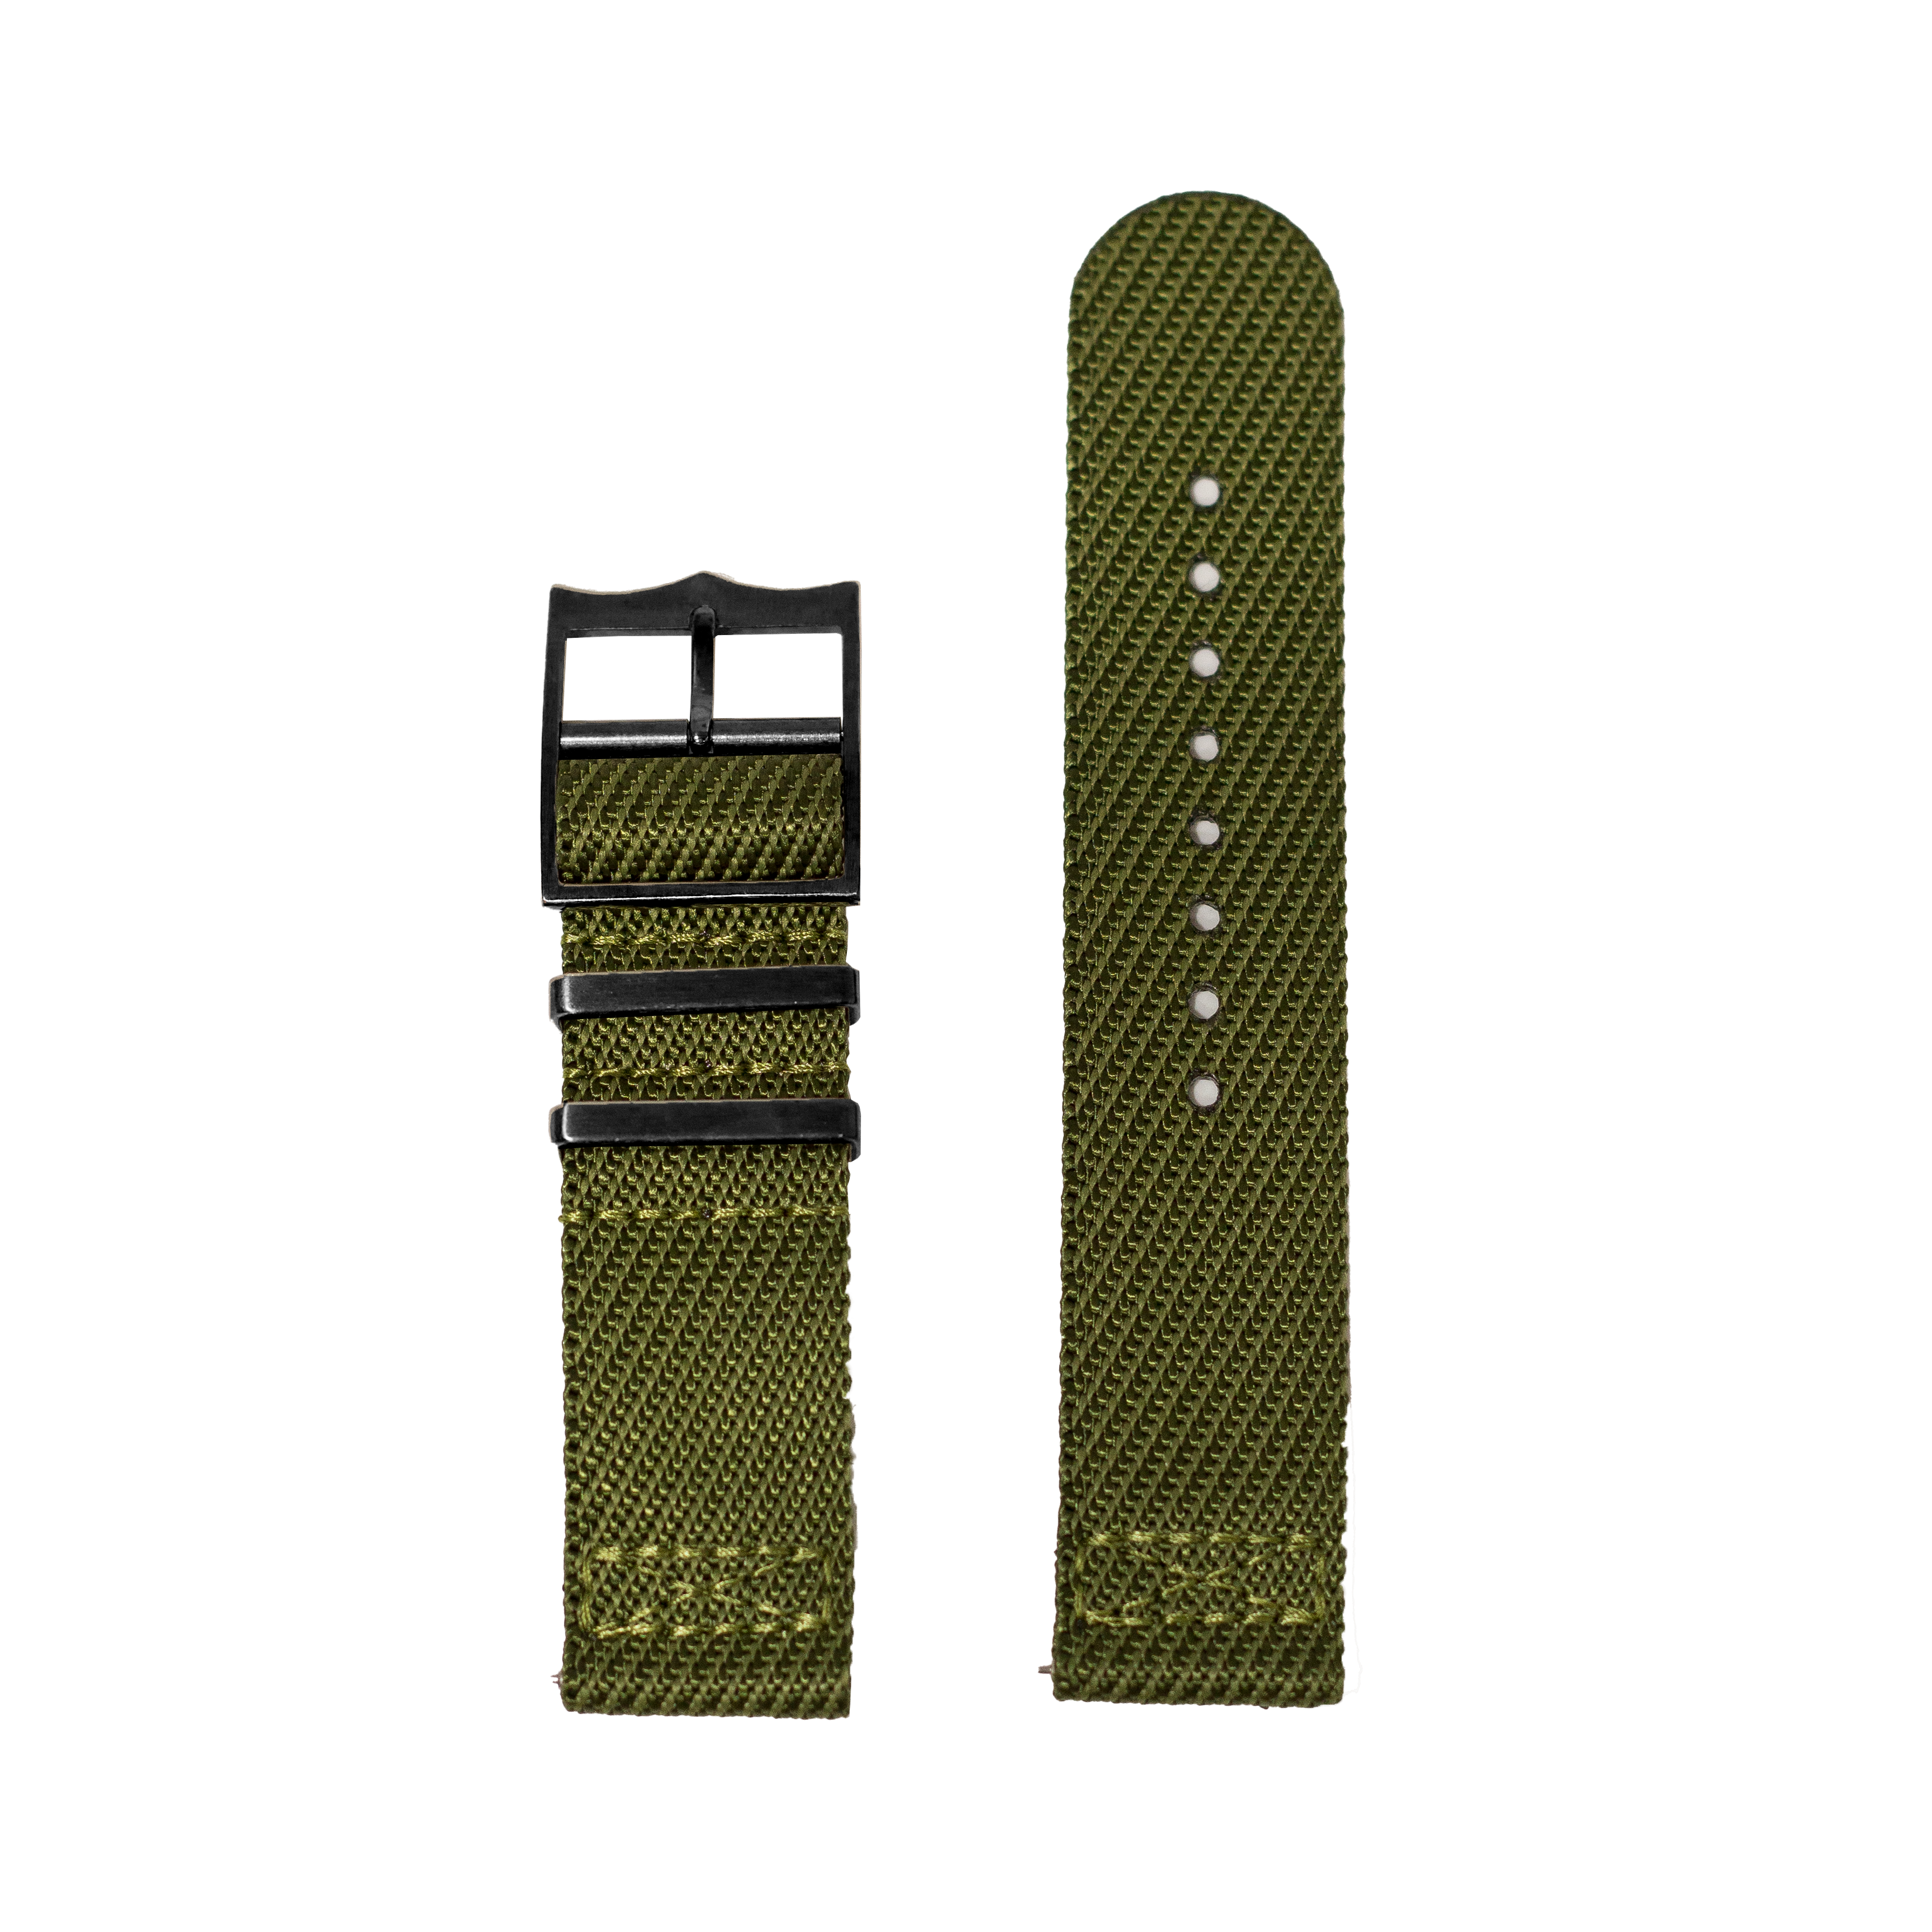 [QuickFit] Cross Militex - Army Green [Black Hardware] 20mm